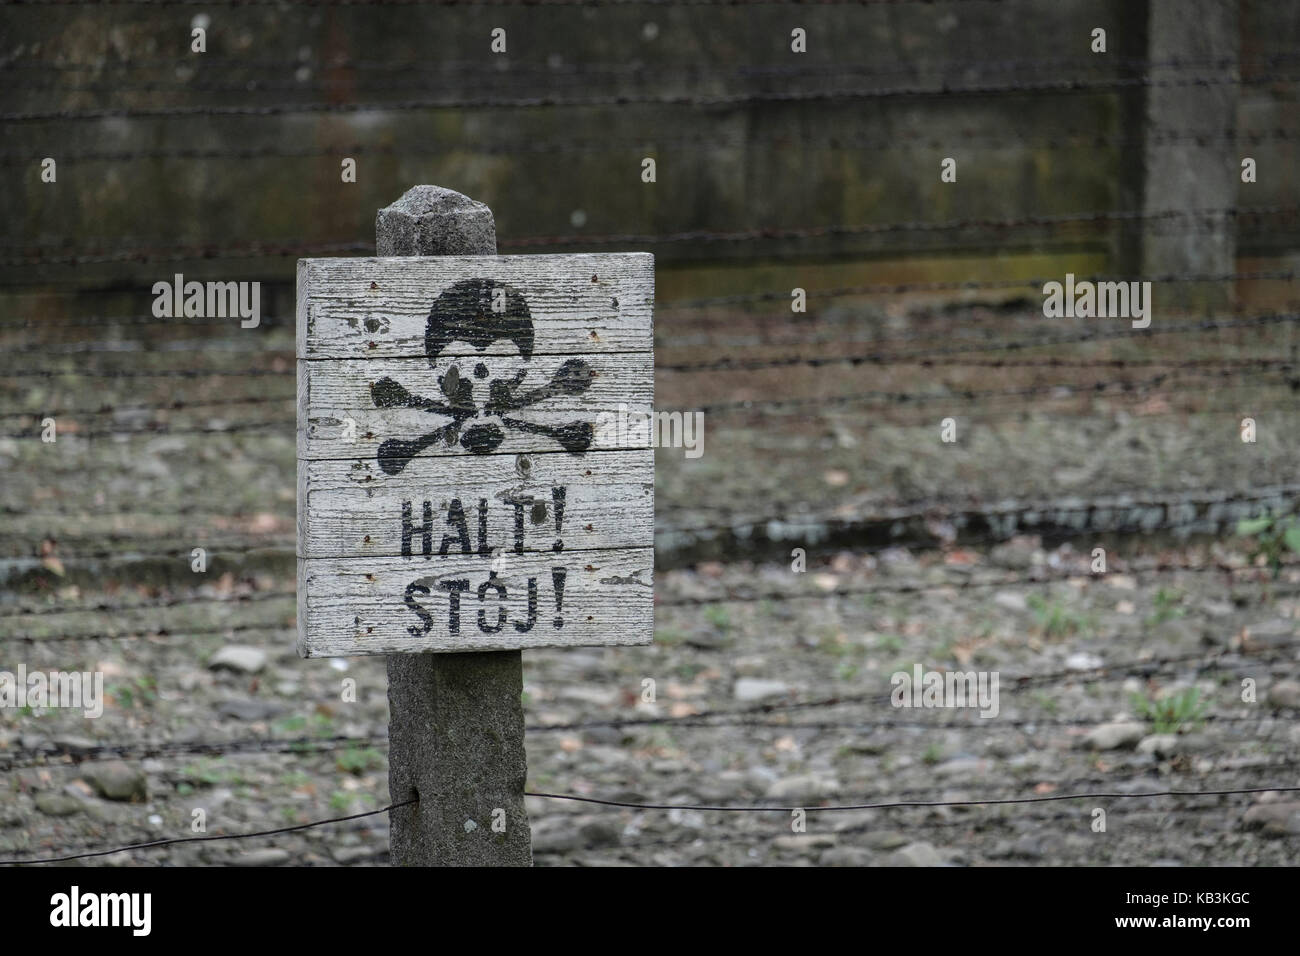 Halt! Stoj! sign at Auschwitz WWII Nazi concentration camp, Poland Stock Photo